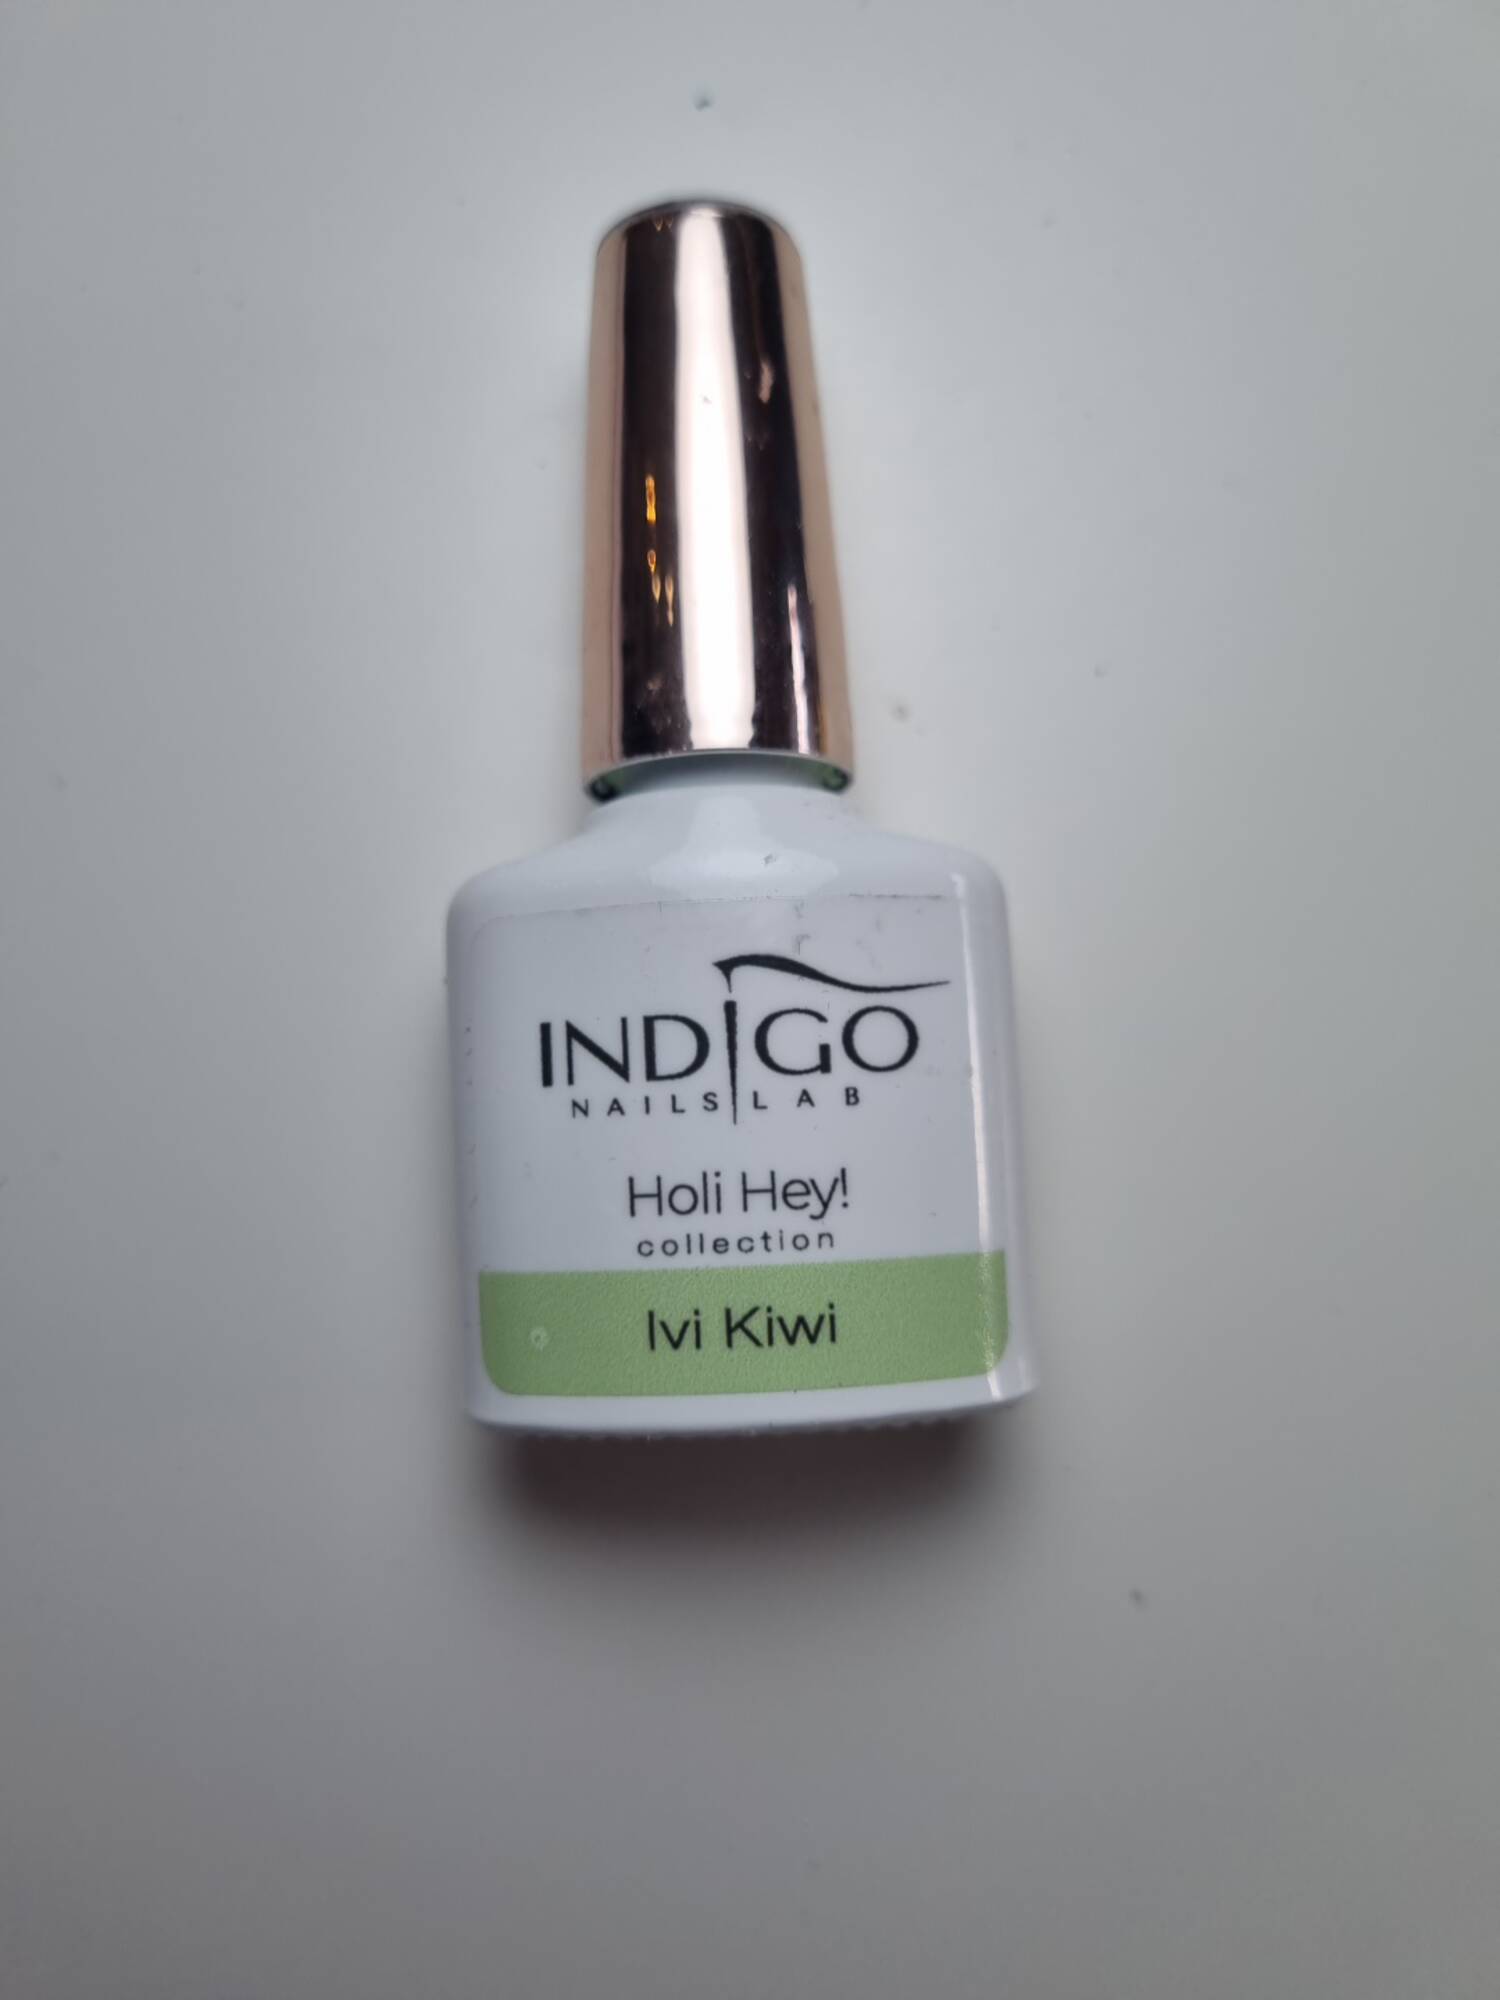 INDIGO NAILS LAB - Holi hey! - Gel polish ivi kiwi